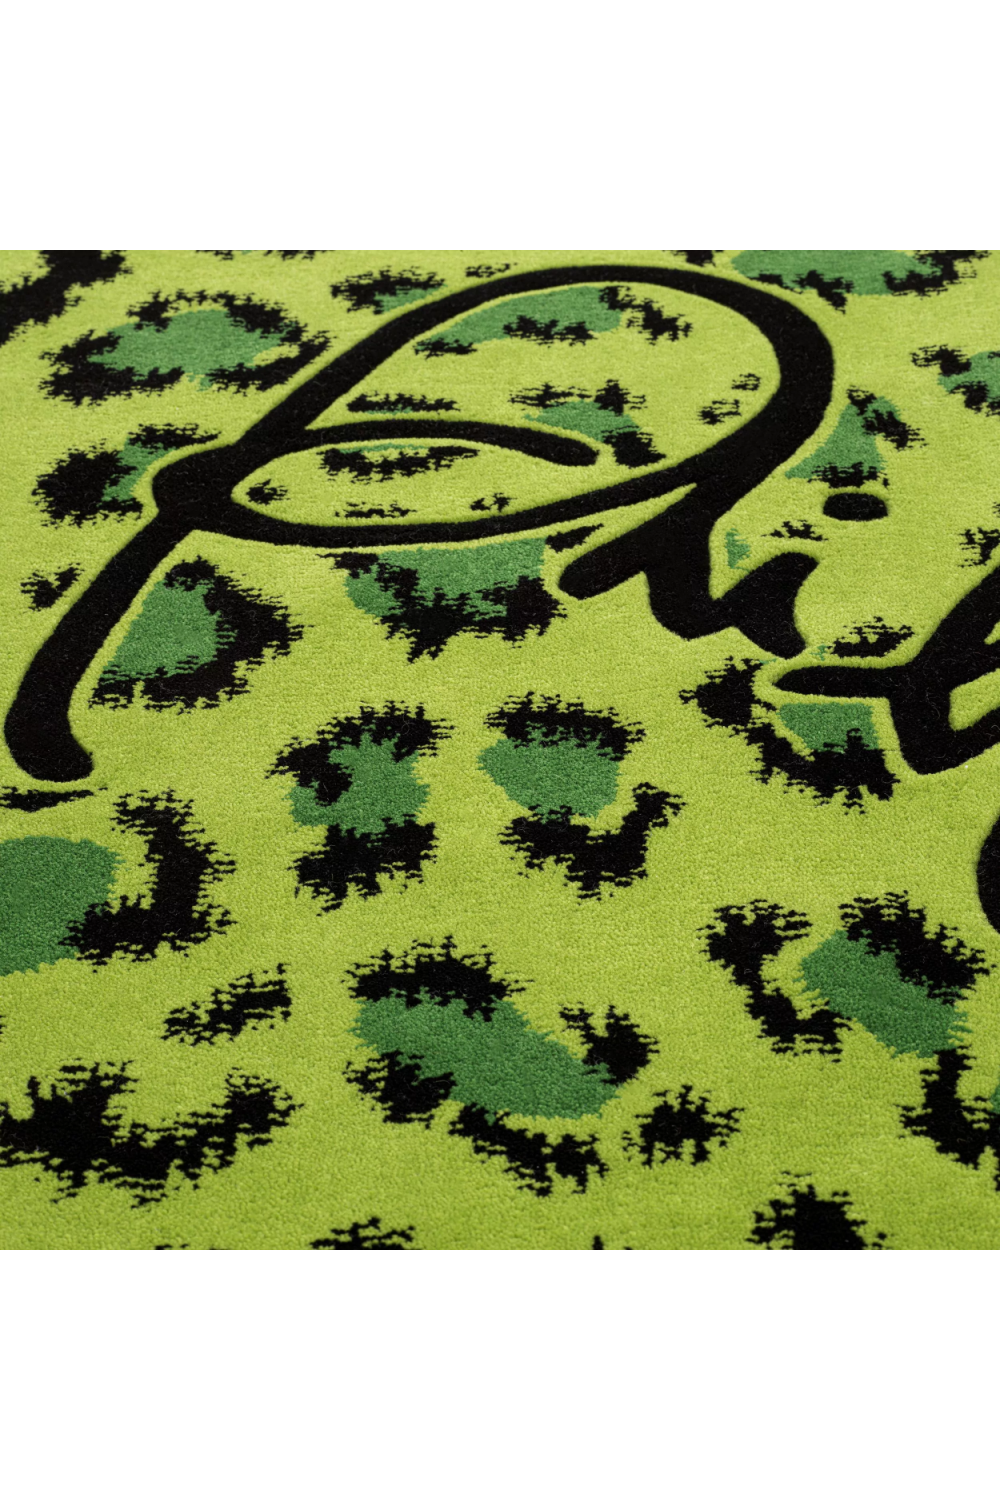 Green Panther Printed Wool Carpet 10' x 13' | Philipp Plein Jungle | Oroa.com